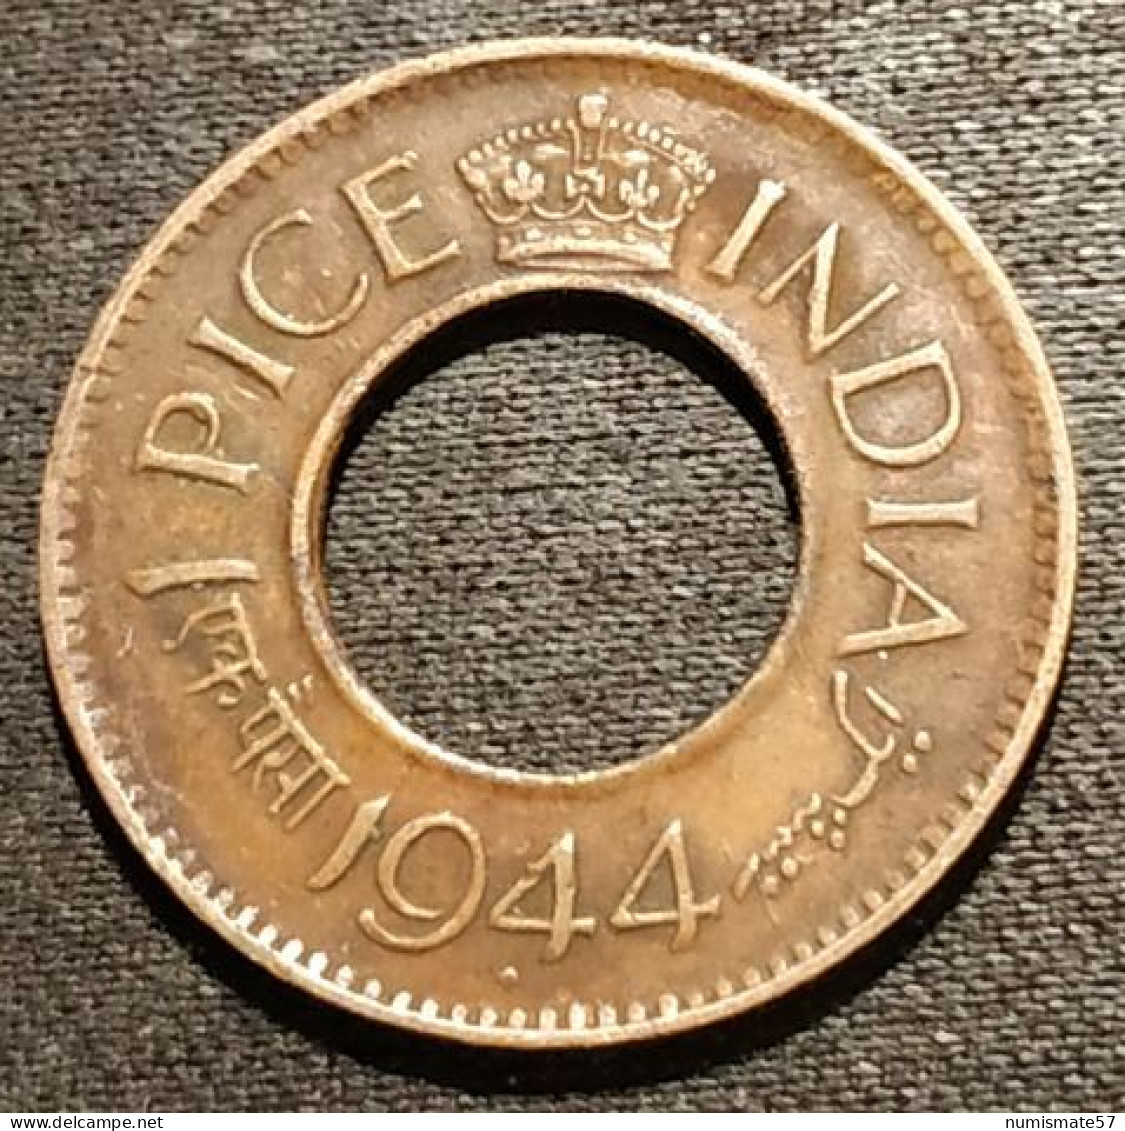 INDE - INDIA - 1 PICE 1944 - George VI - KM 533 - India